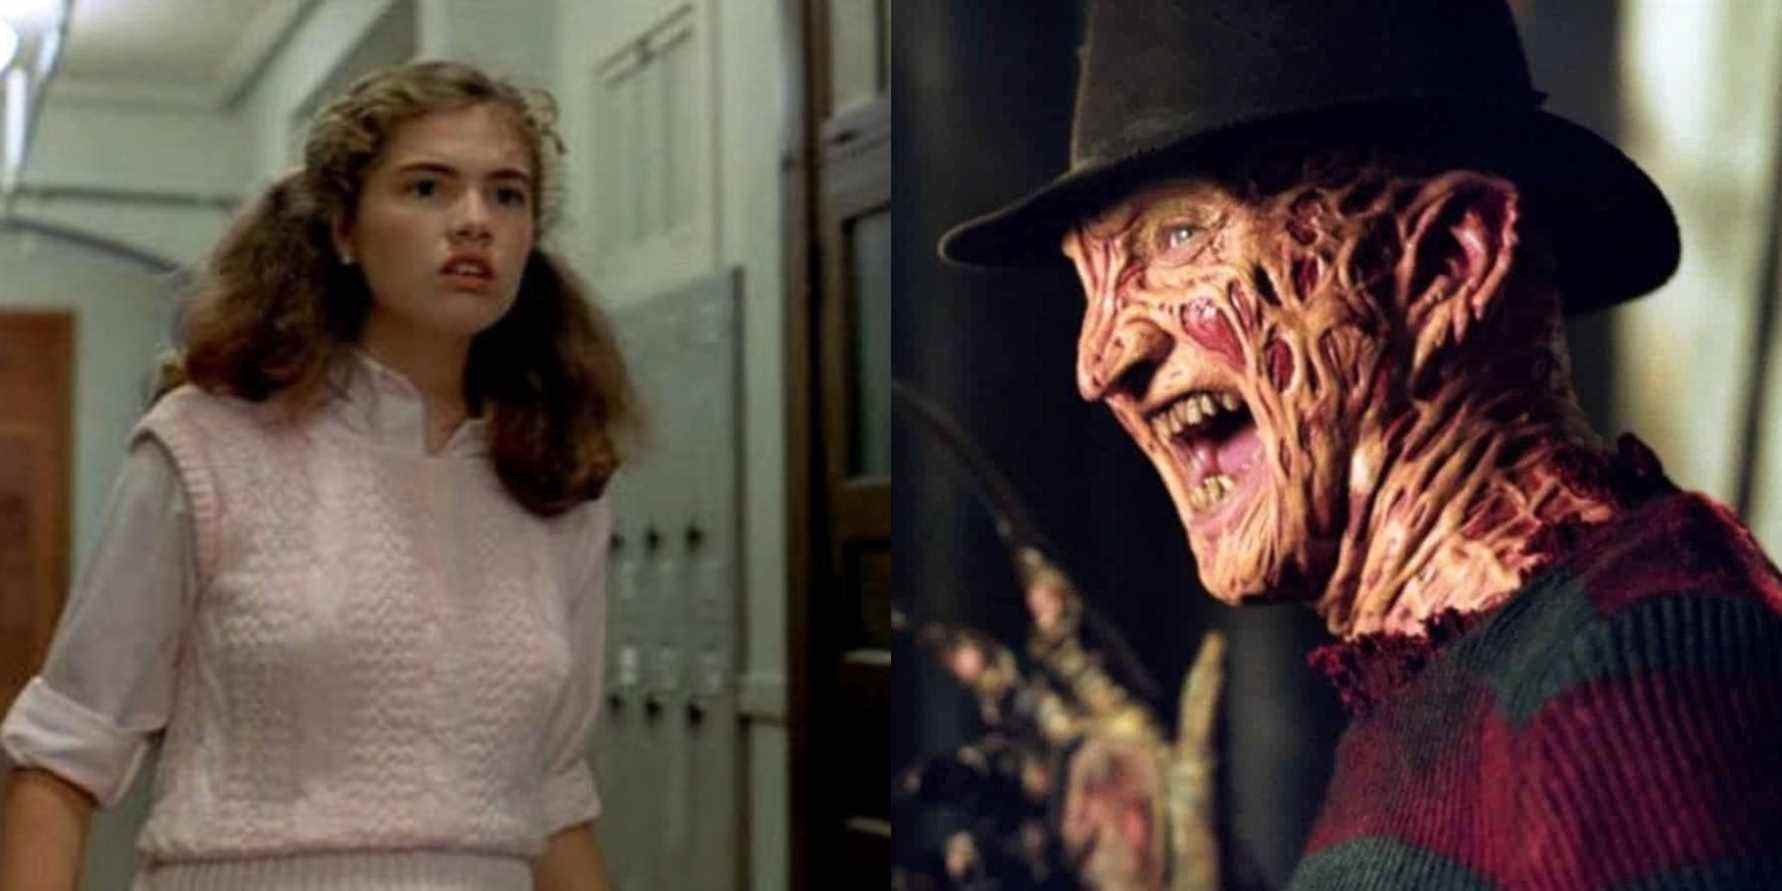 Image partagée de Nancy Thompson et Freddy Krueger dans A Nightmare On Elm Street